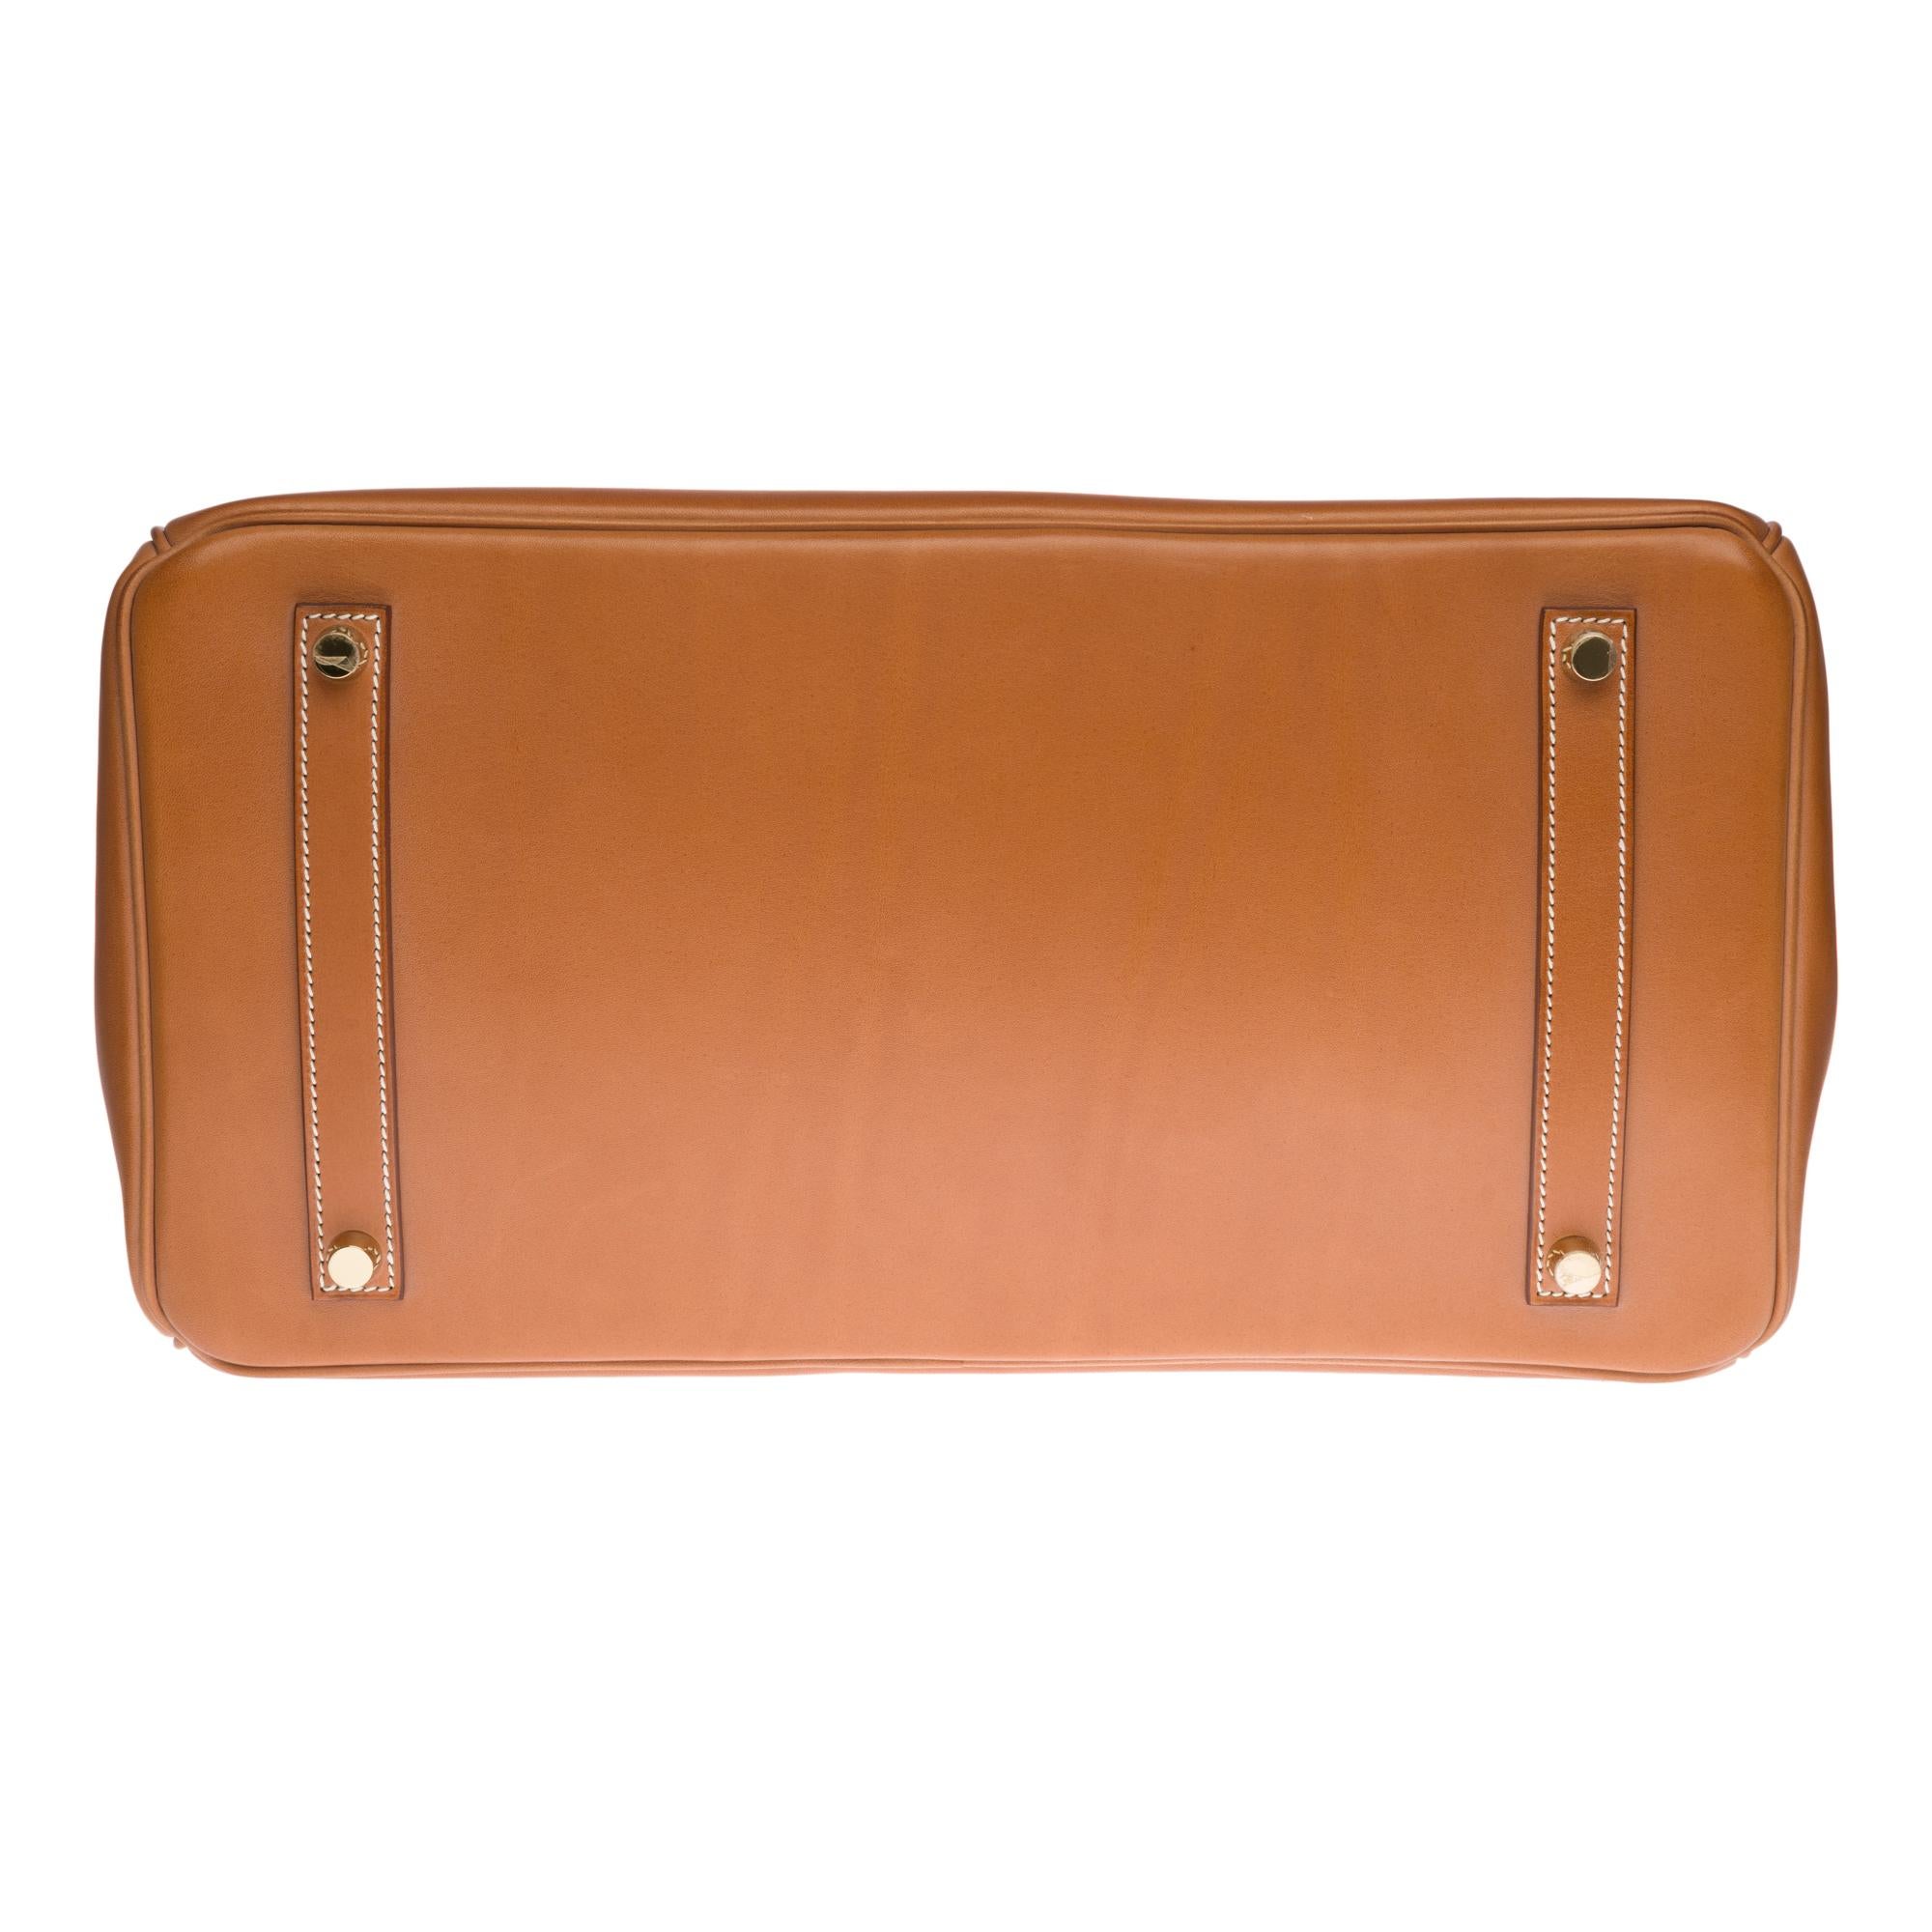 NEW - ULTRA RARE- Hermès Birkin 35 handbag in Gold Barenia leather, GHW 4